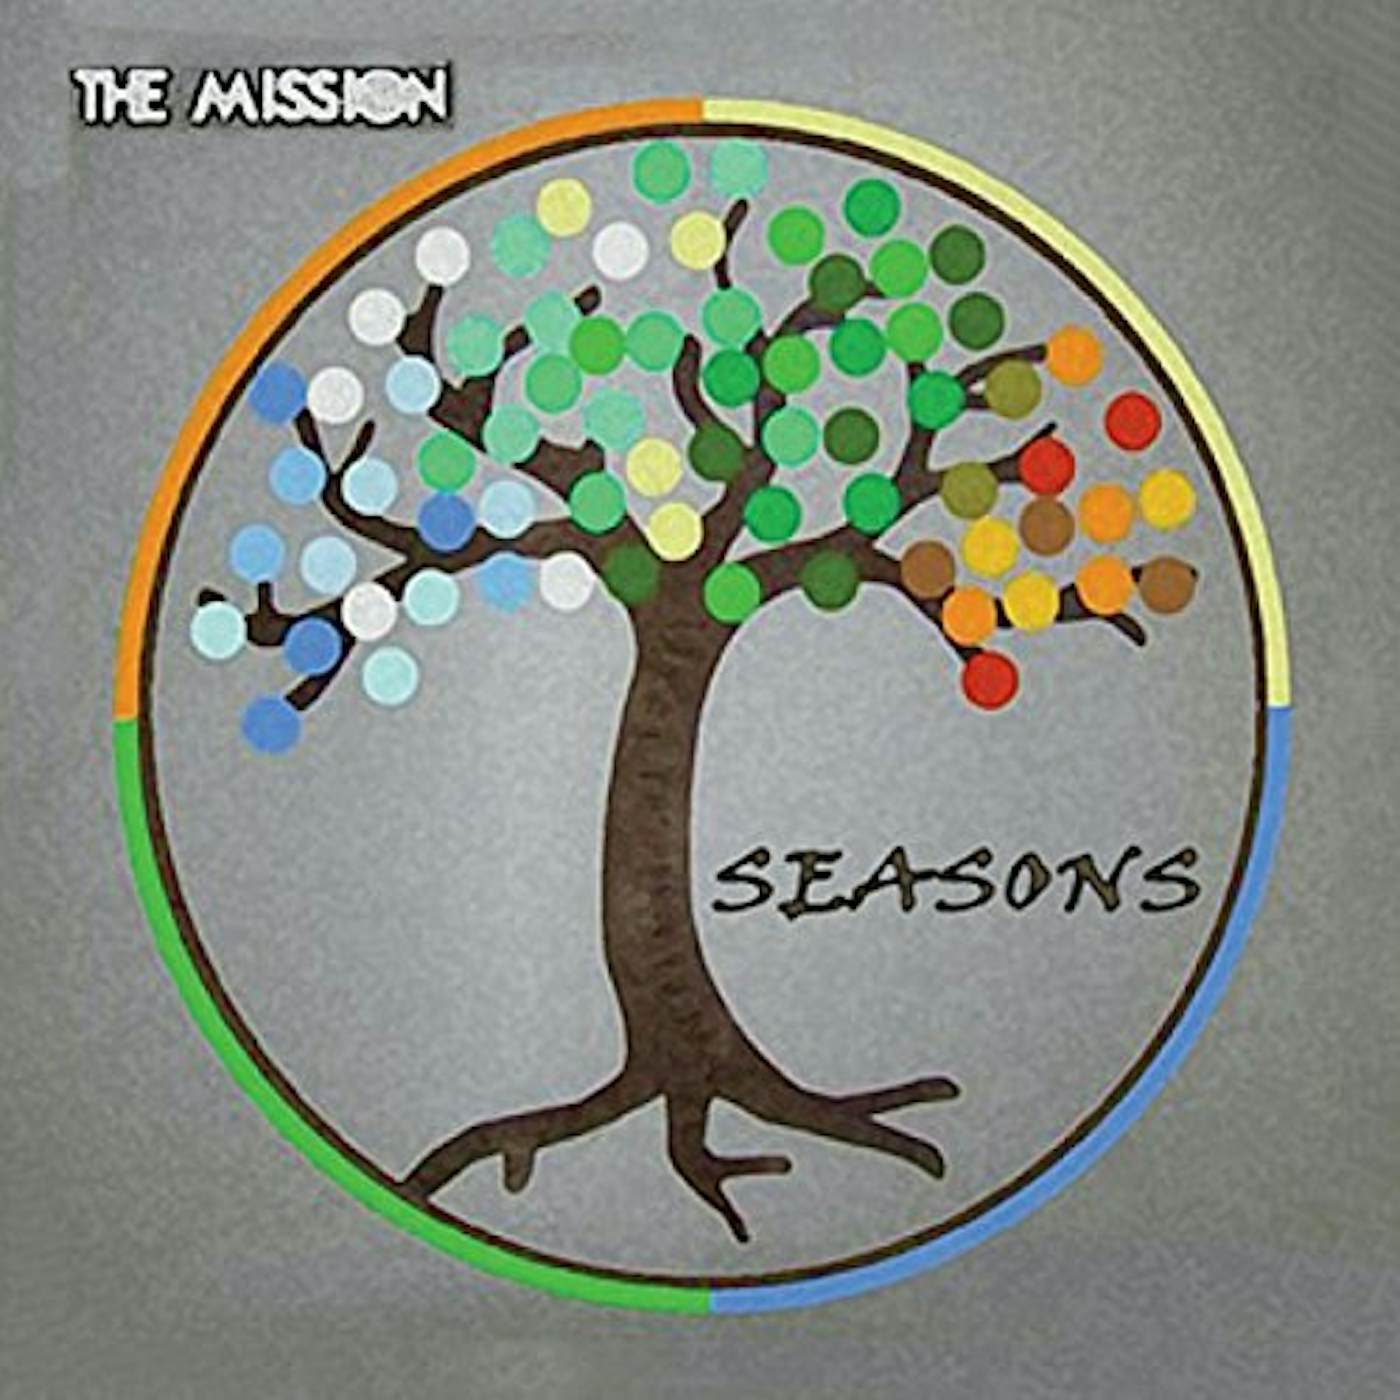 The Mission SEASONS CD